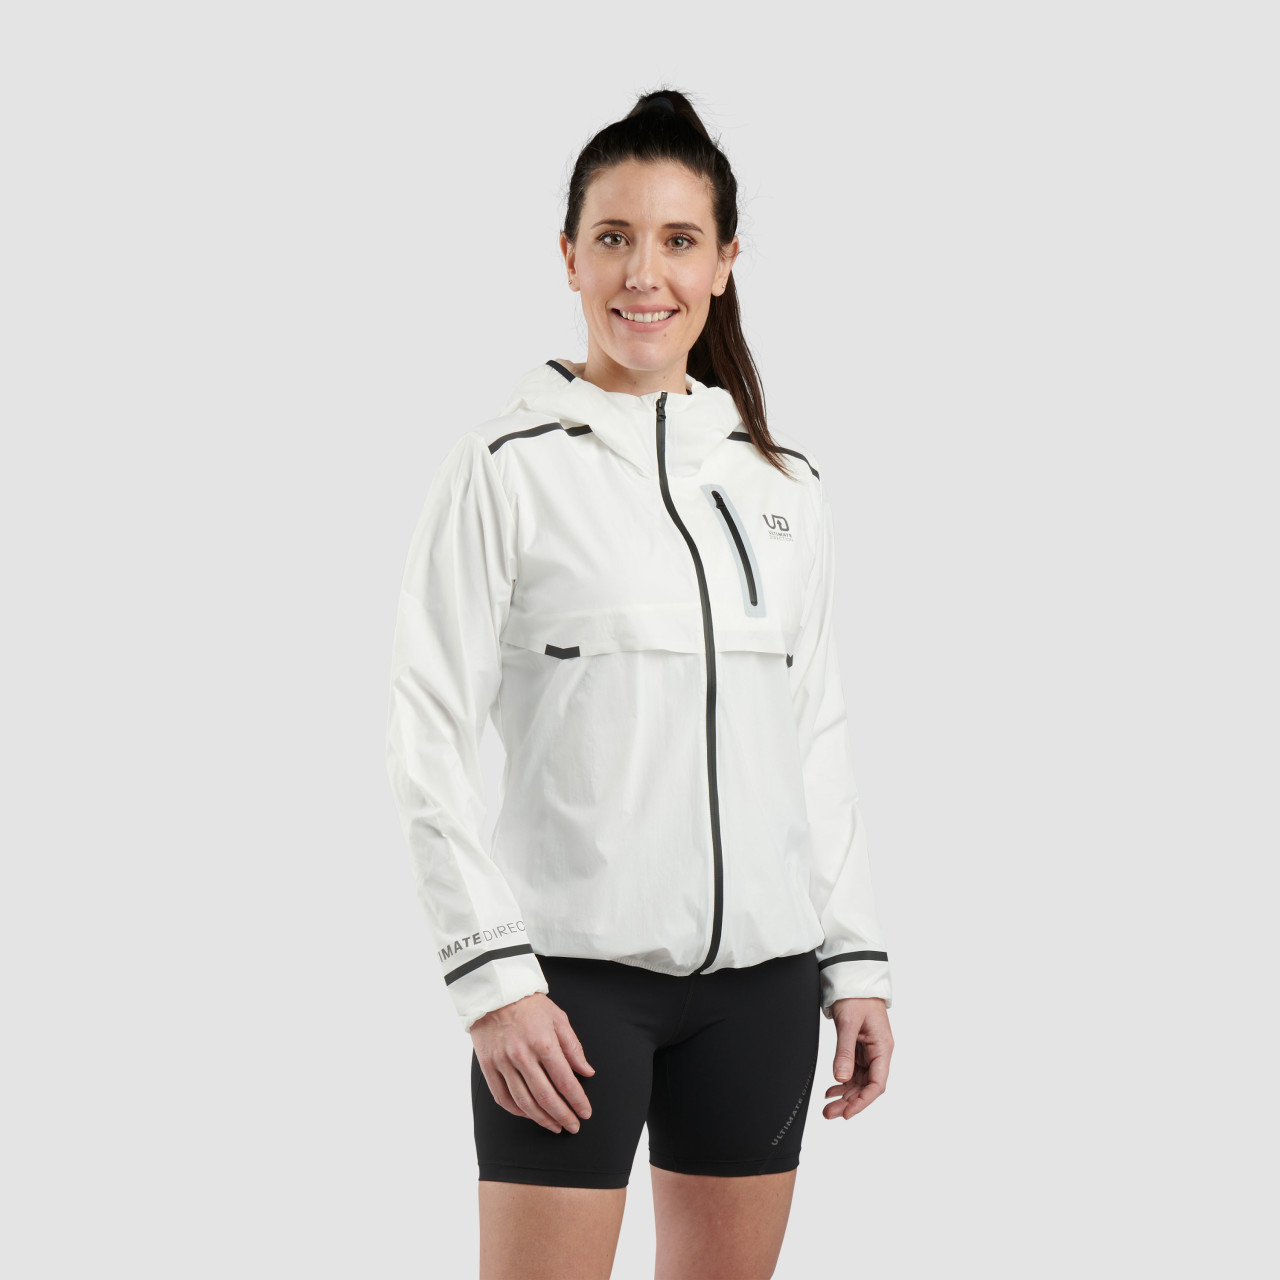 Ultimate Direction Women's Aerolight Wind Jacket in White Size Large